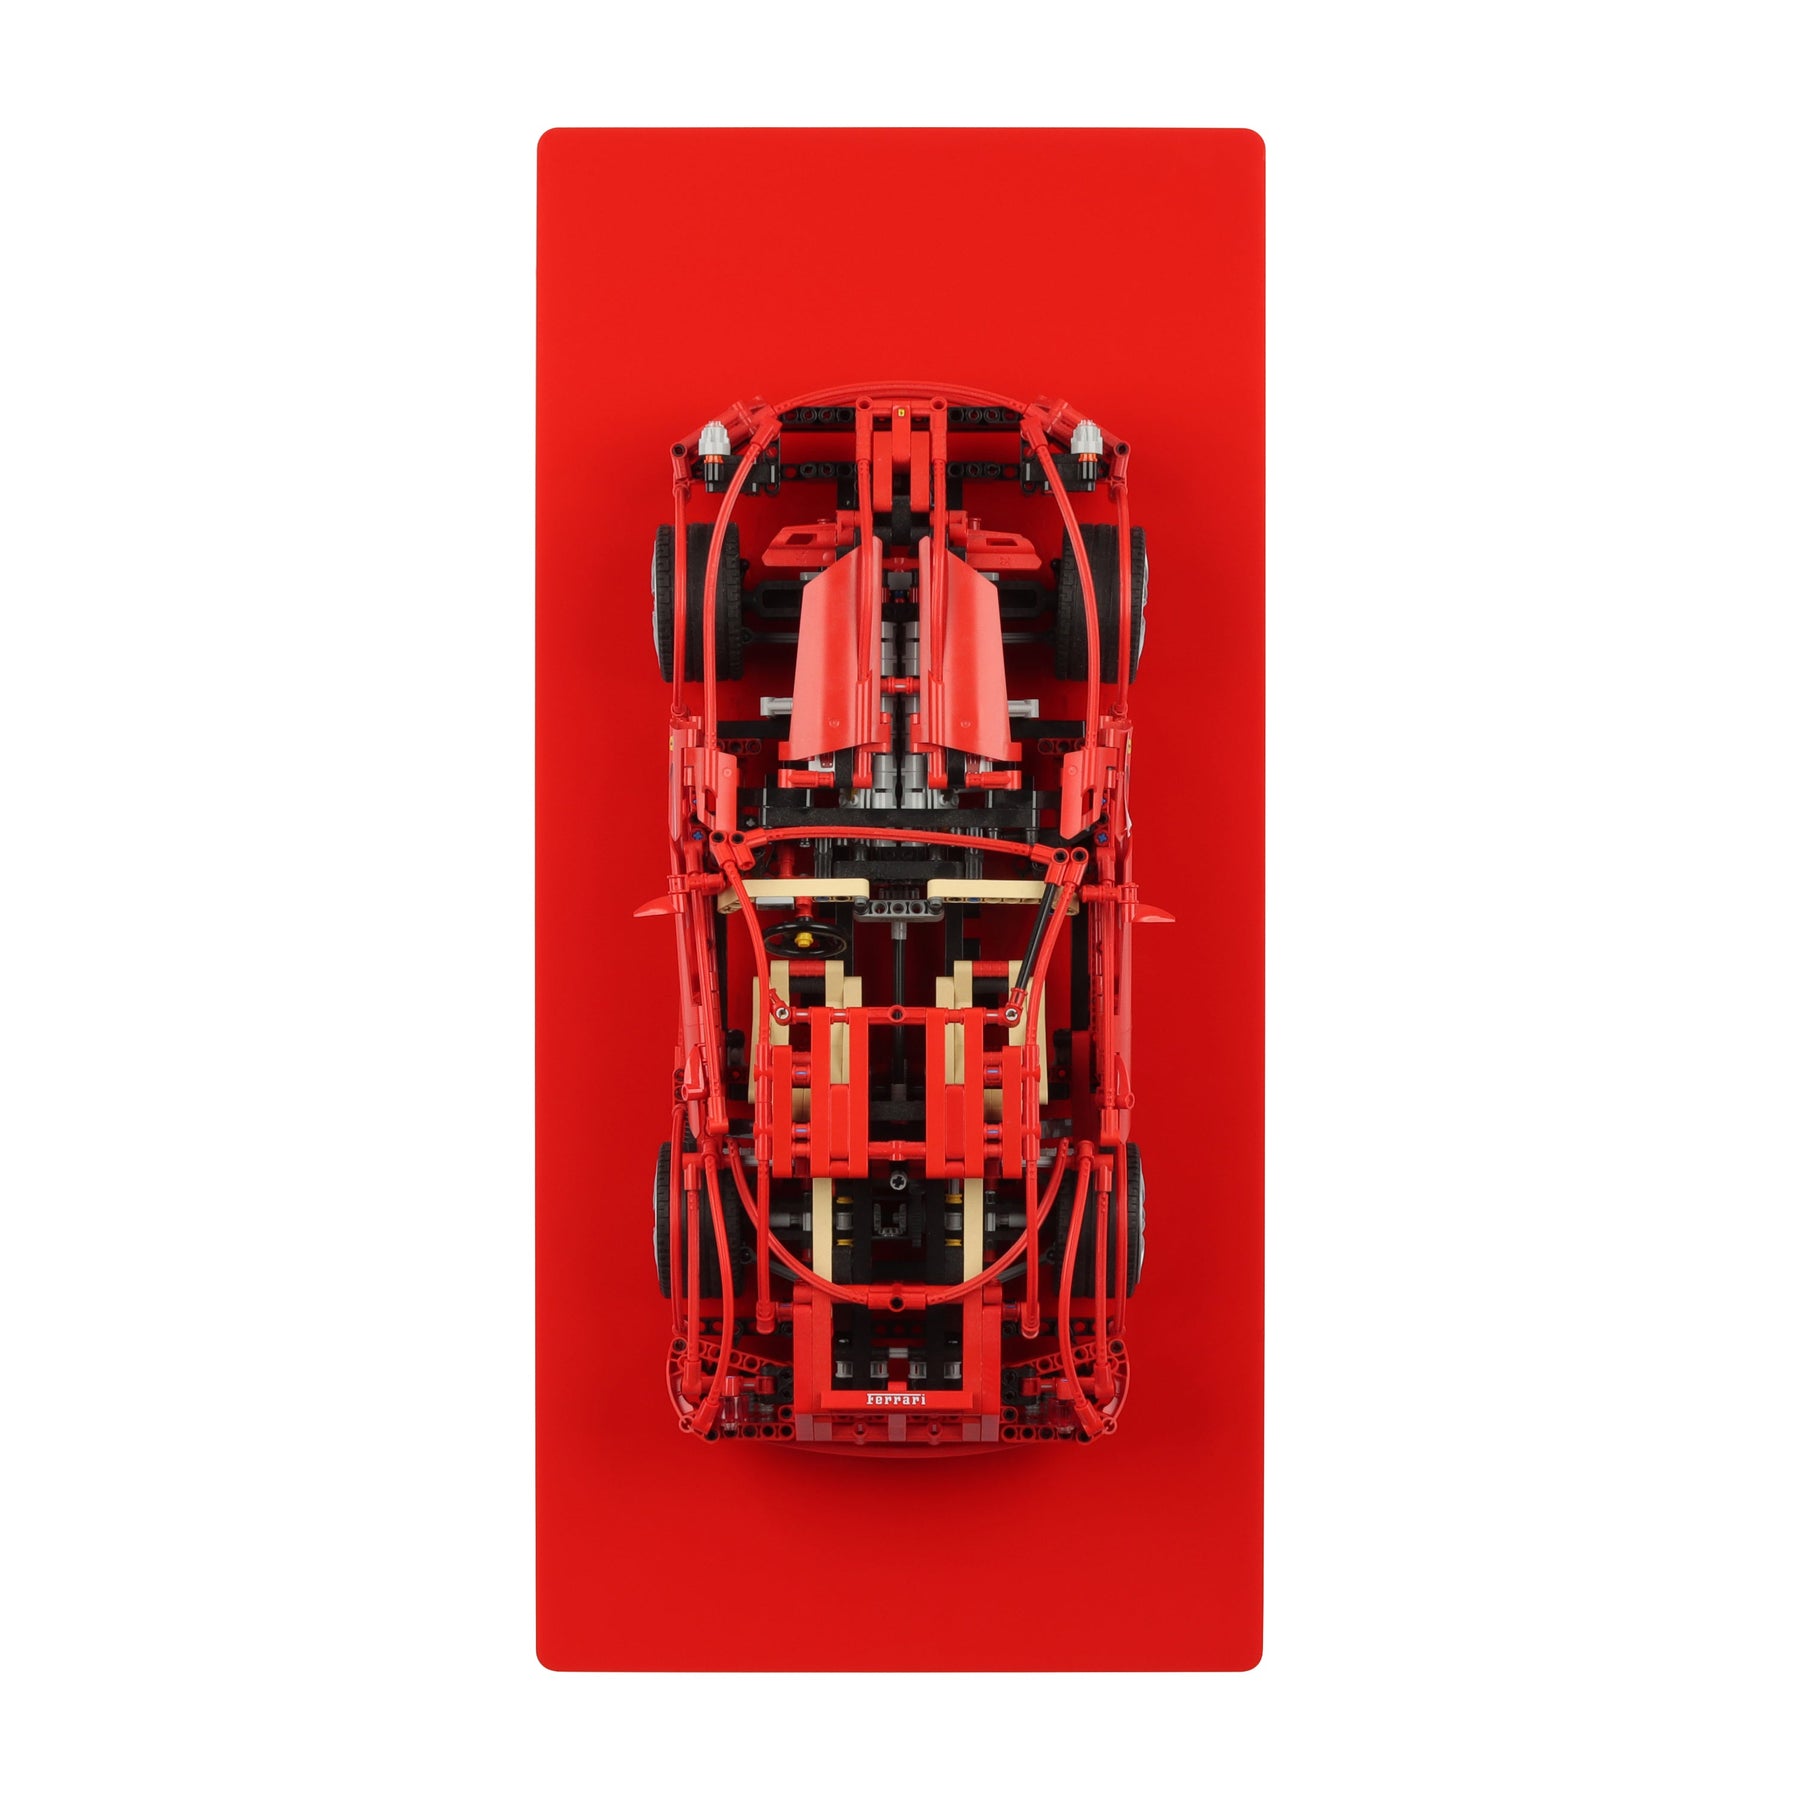 Wall display for LEGO 8145 Ferrari 599 GTB Fiorano